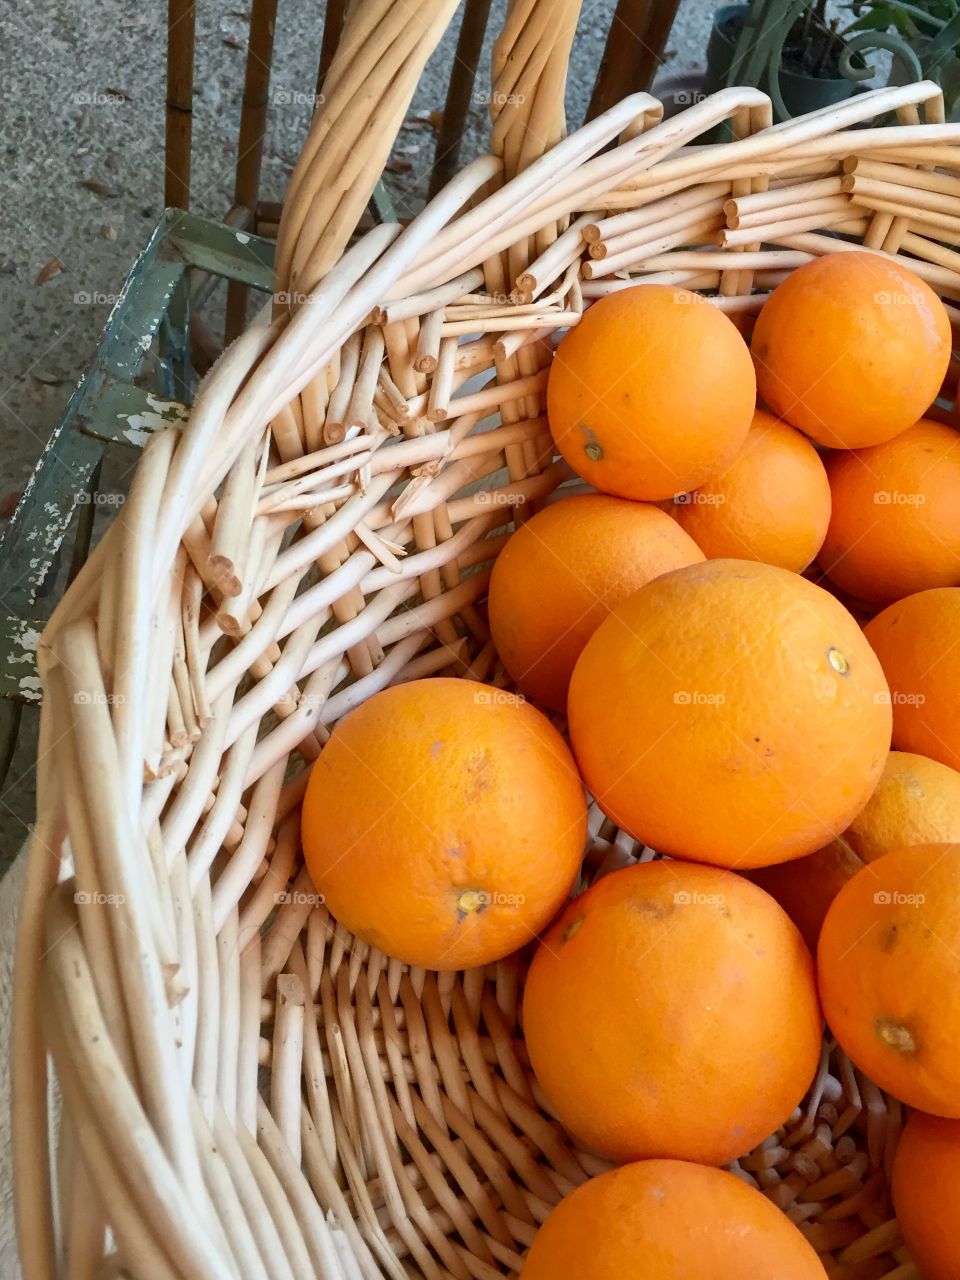 California grown oranges in wicker basket